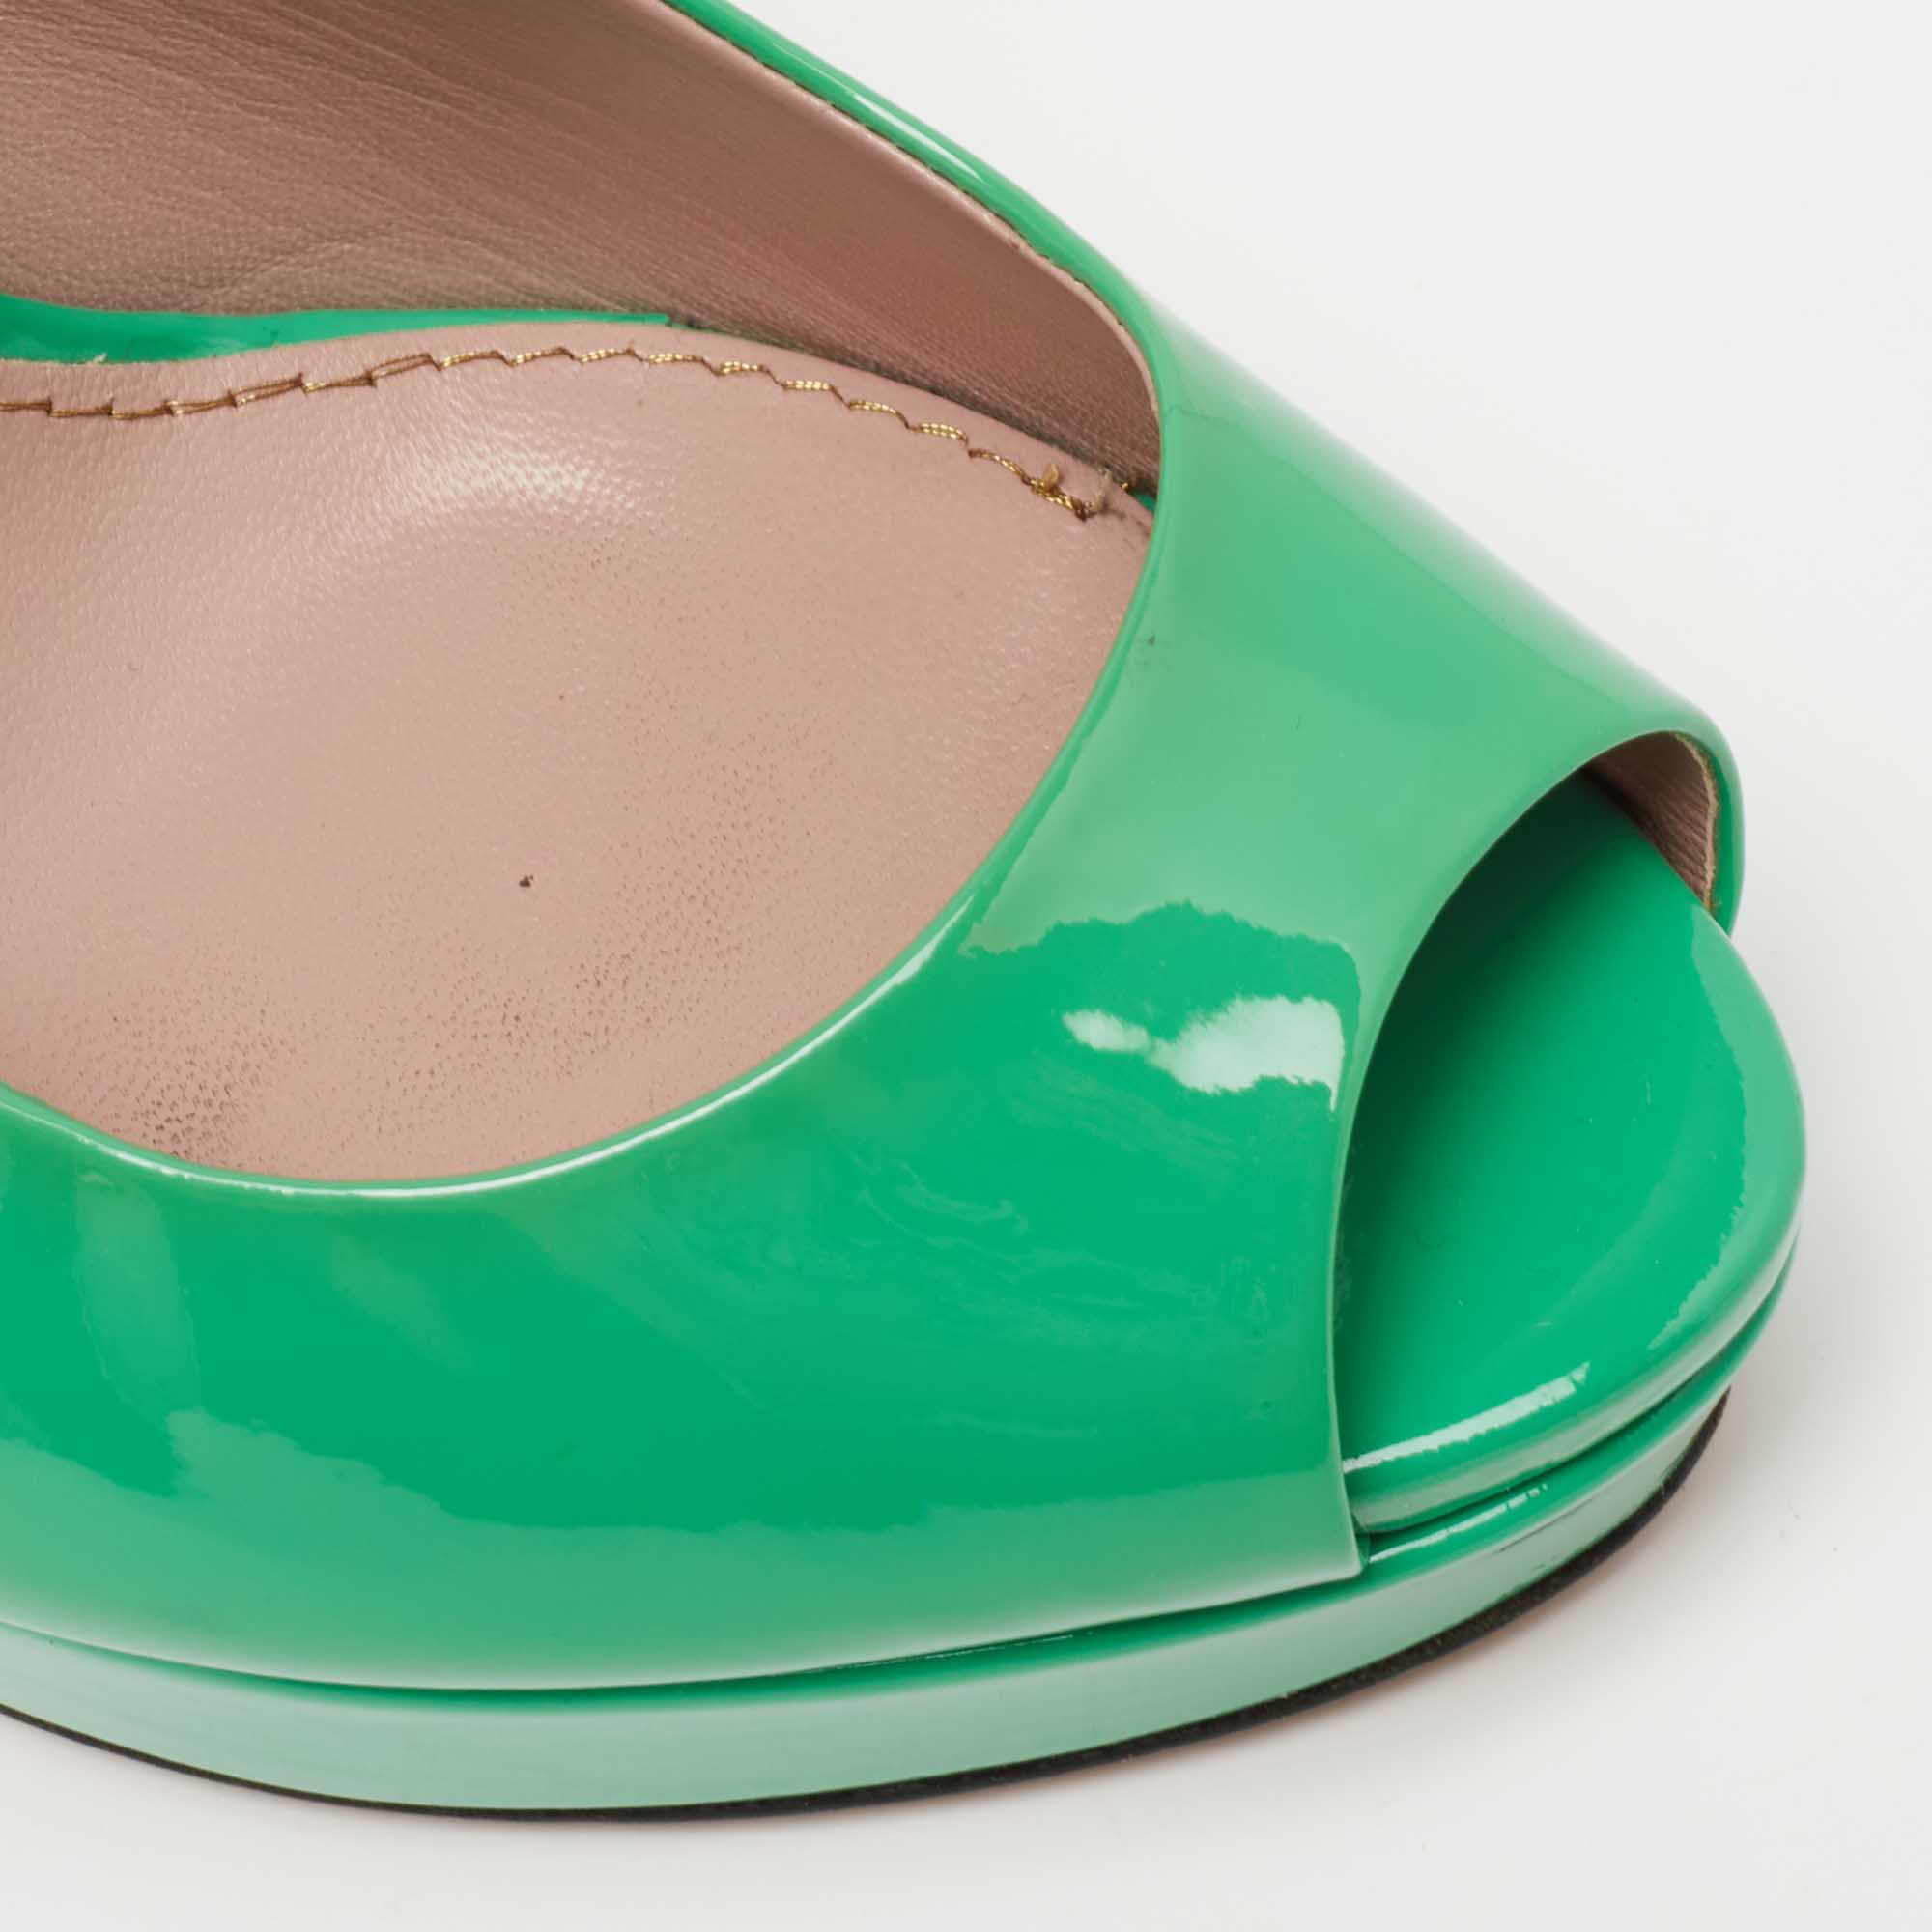 Gucci Green Patent Leather Sofia Platform Peep Toe Ankle Strap Sandals Size 35.5